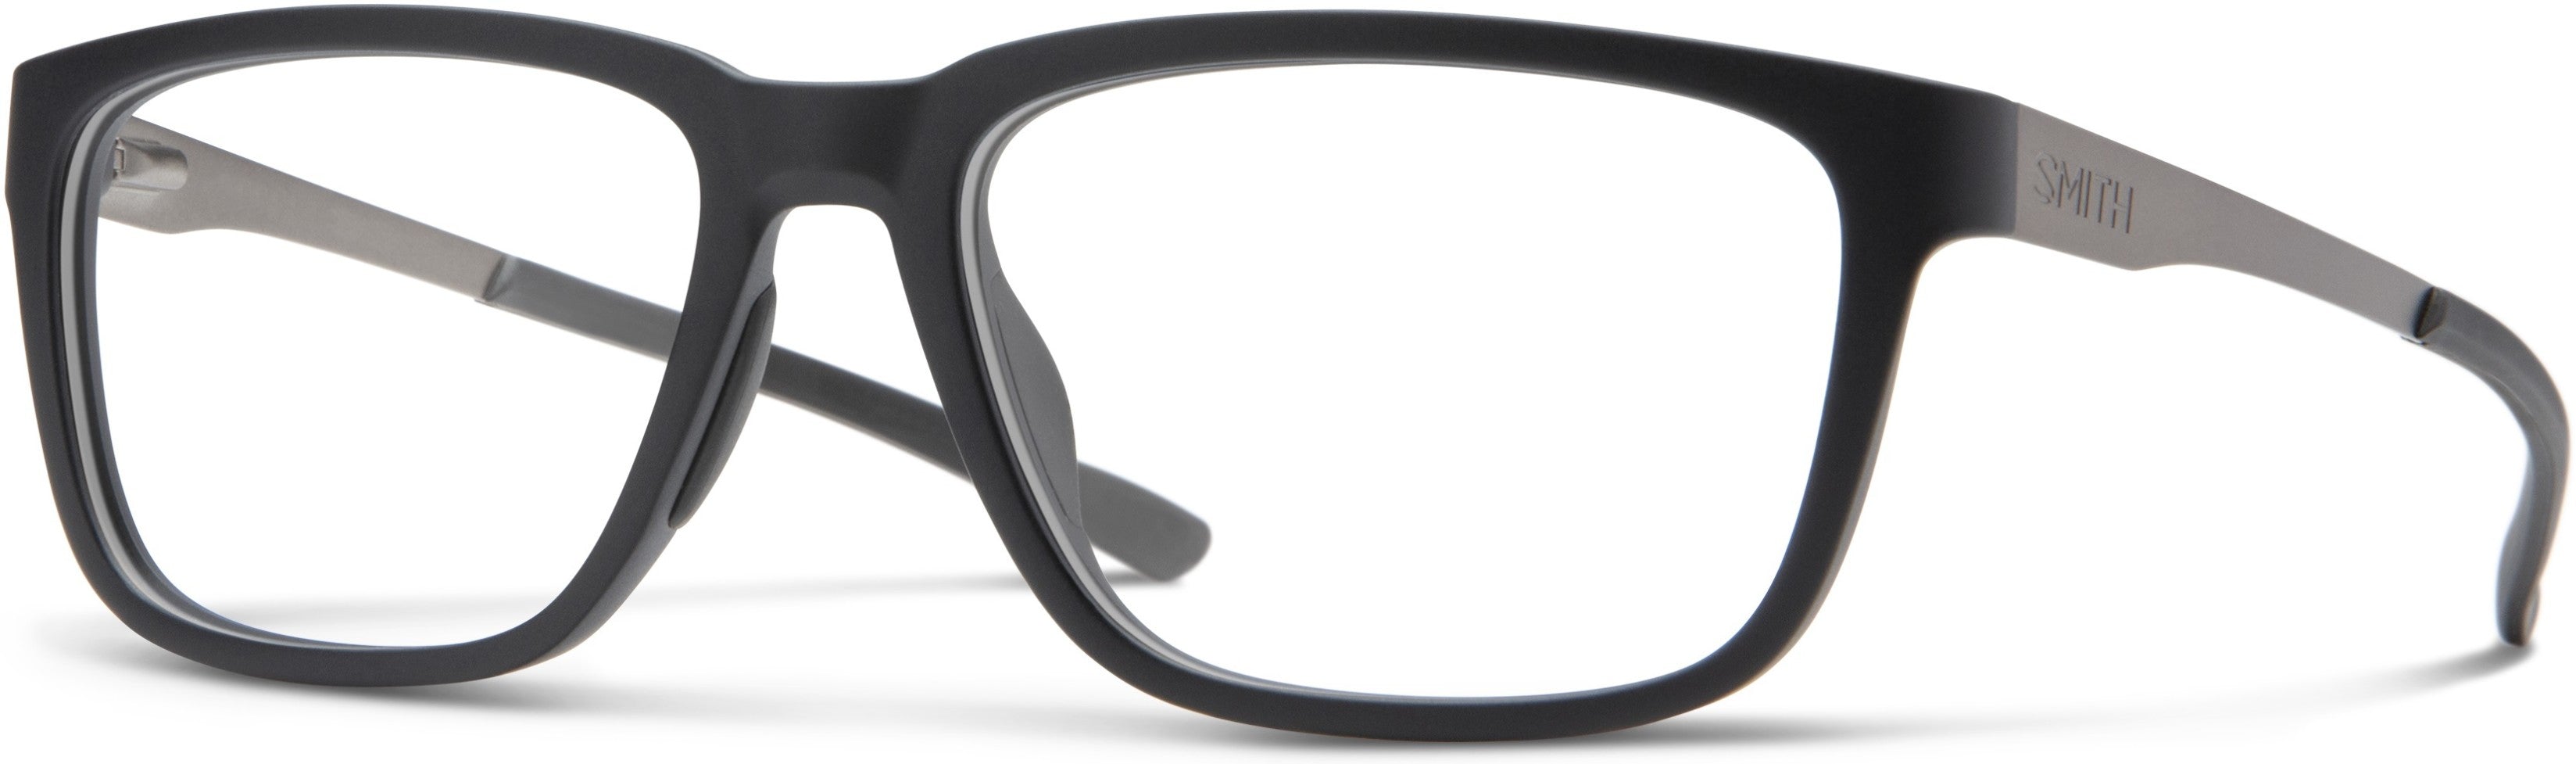 Smith Spindle Rectangular Eyeglasses 0003-0003  Matte Black (00 Demo Lens)